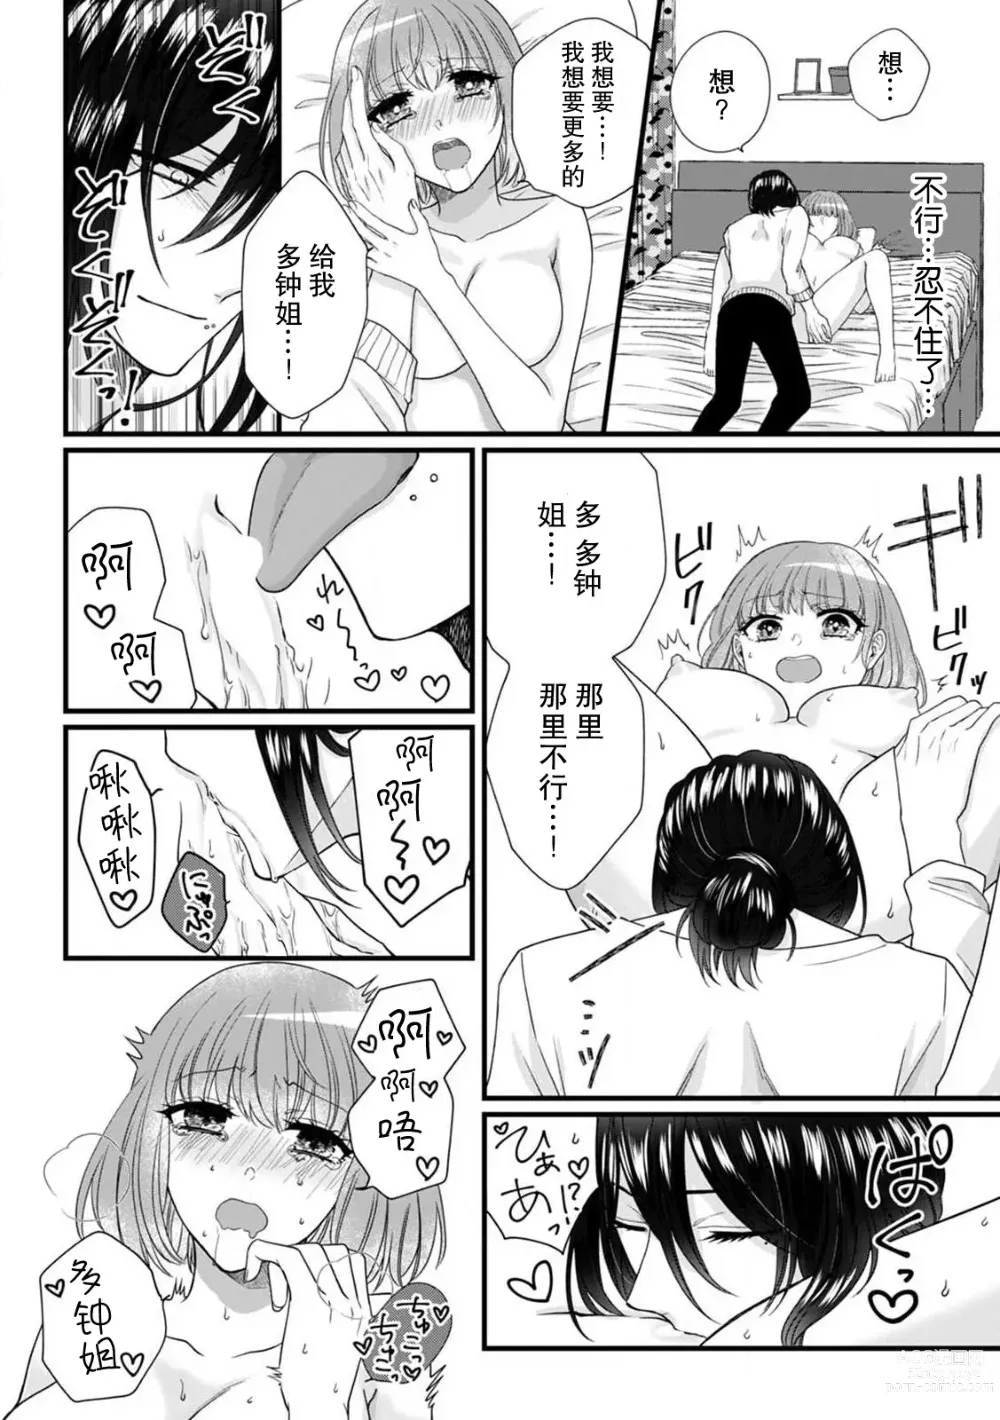 Page 16 of manga 弄湿我的是青梅竹马的男大姐 第一次见到……他认真的雄性一面。 1-5 end